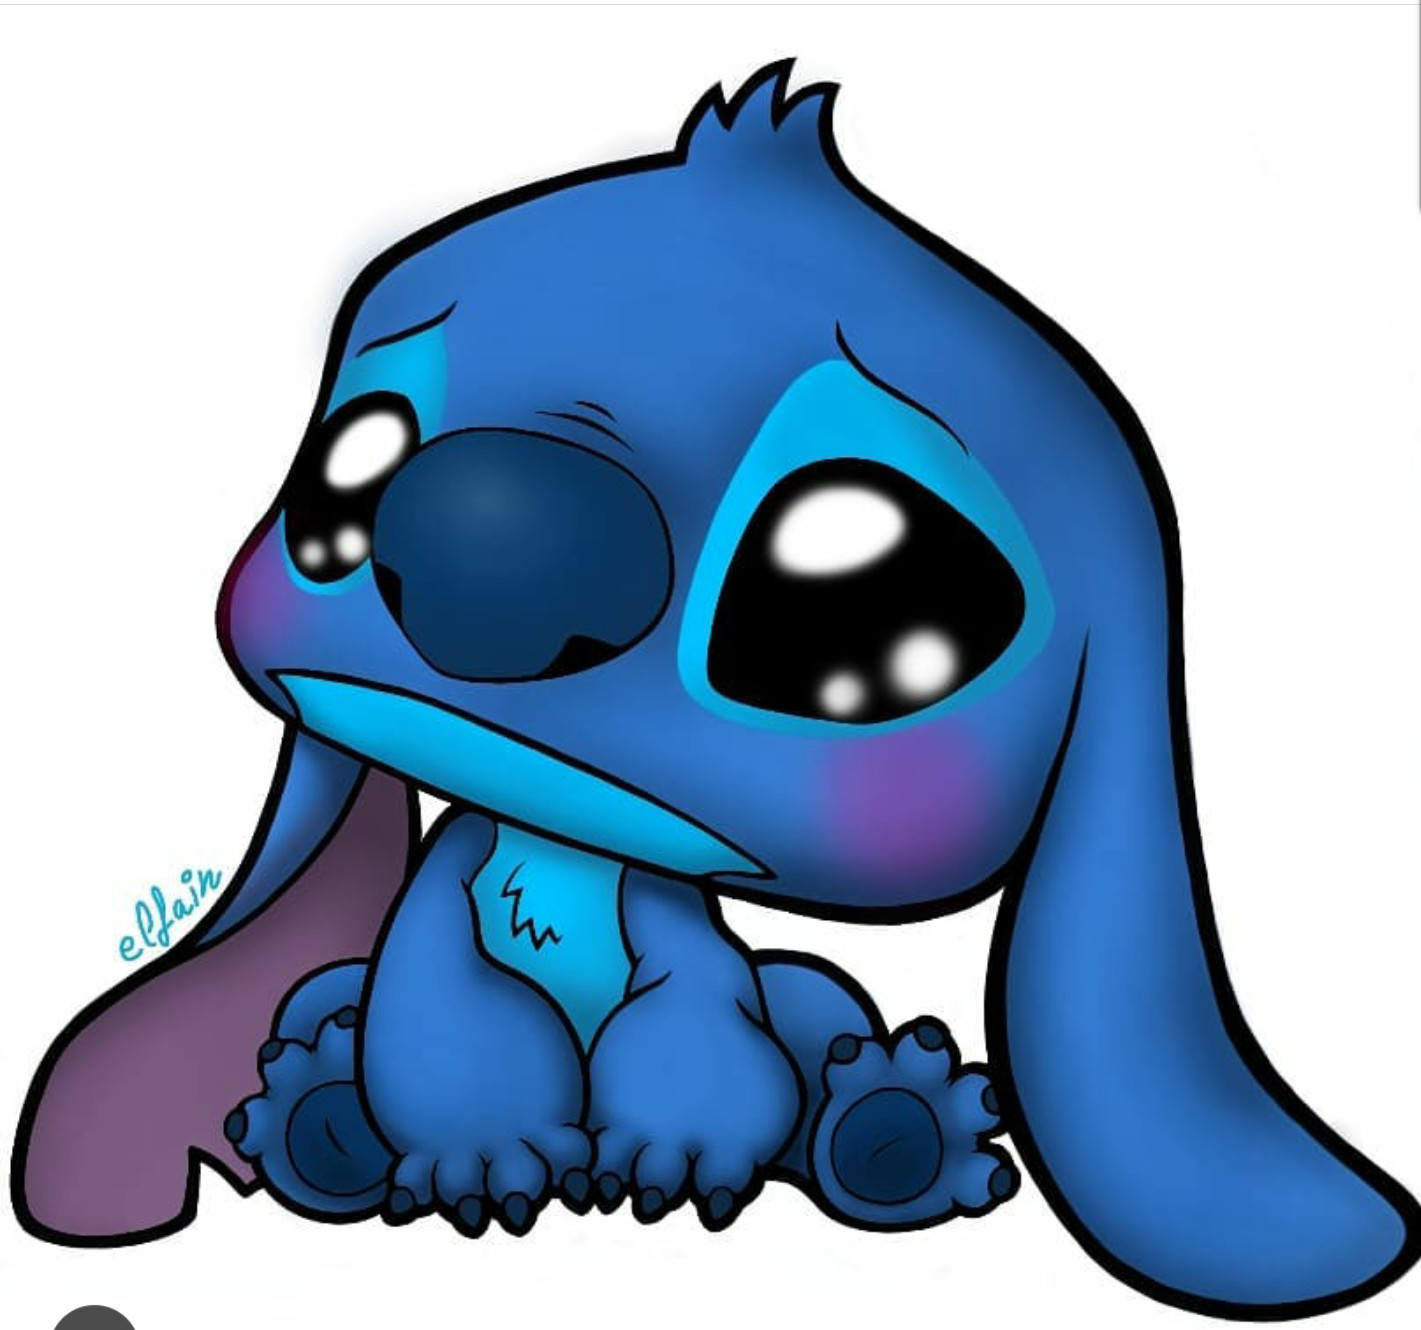 elfain Art - Cute Sad Stitch